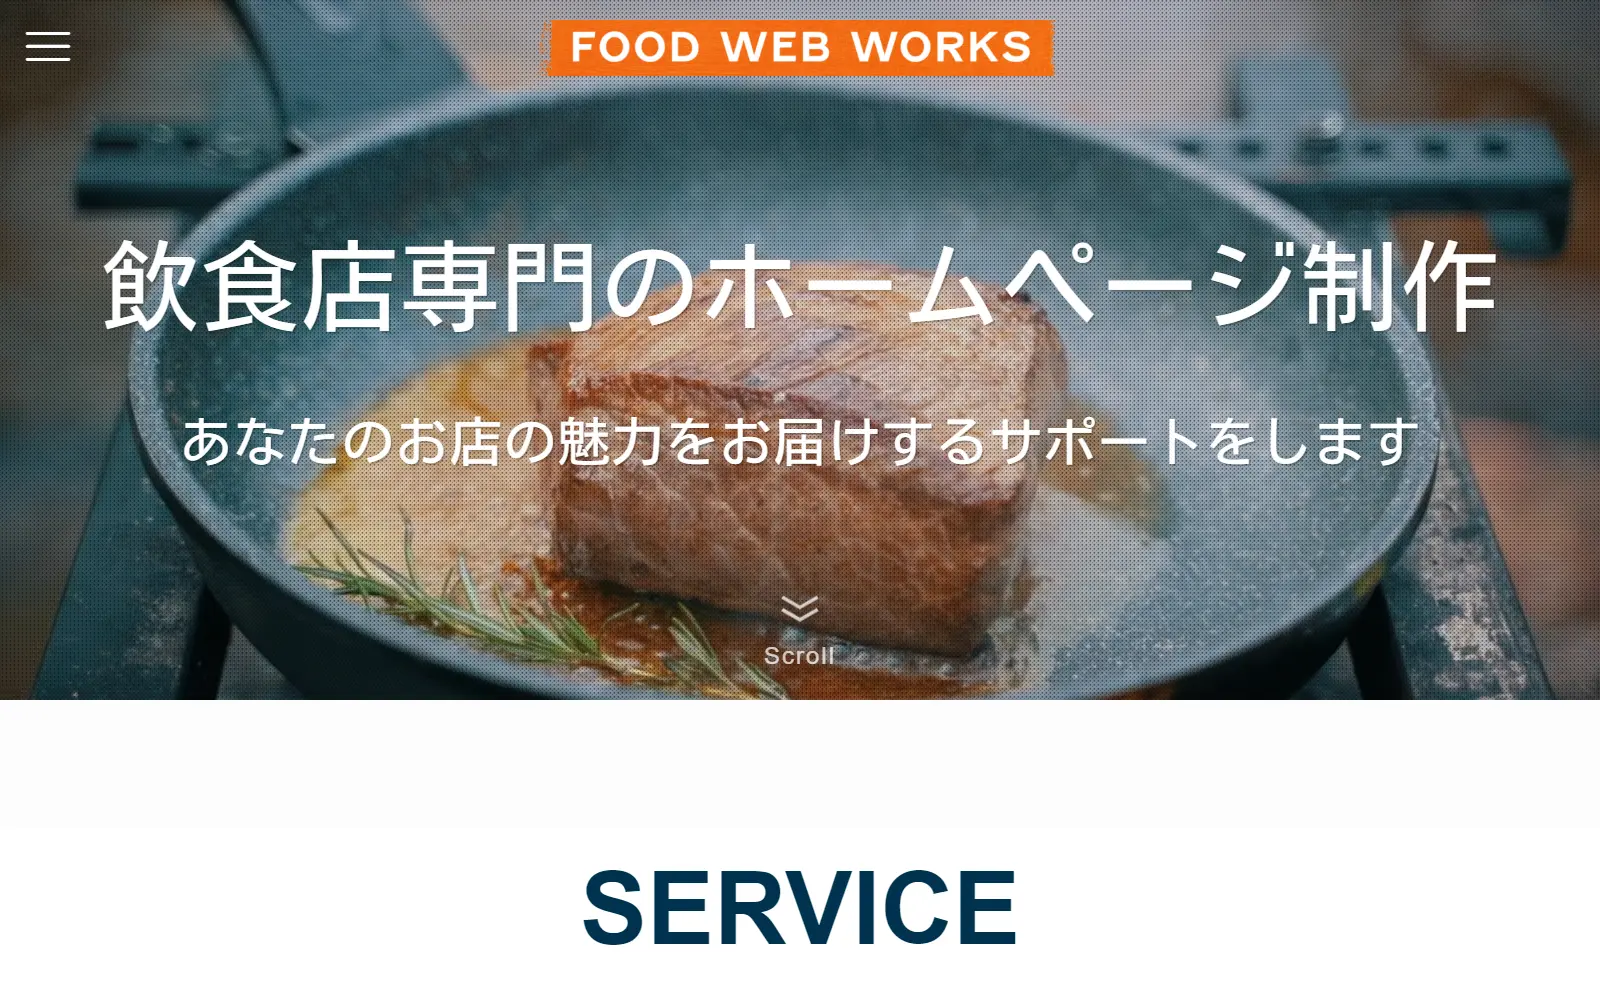 FOOD WEB WORKS